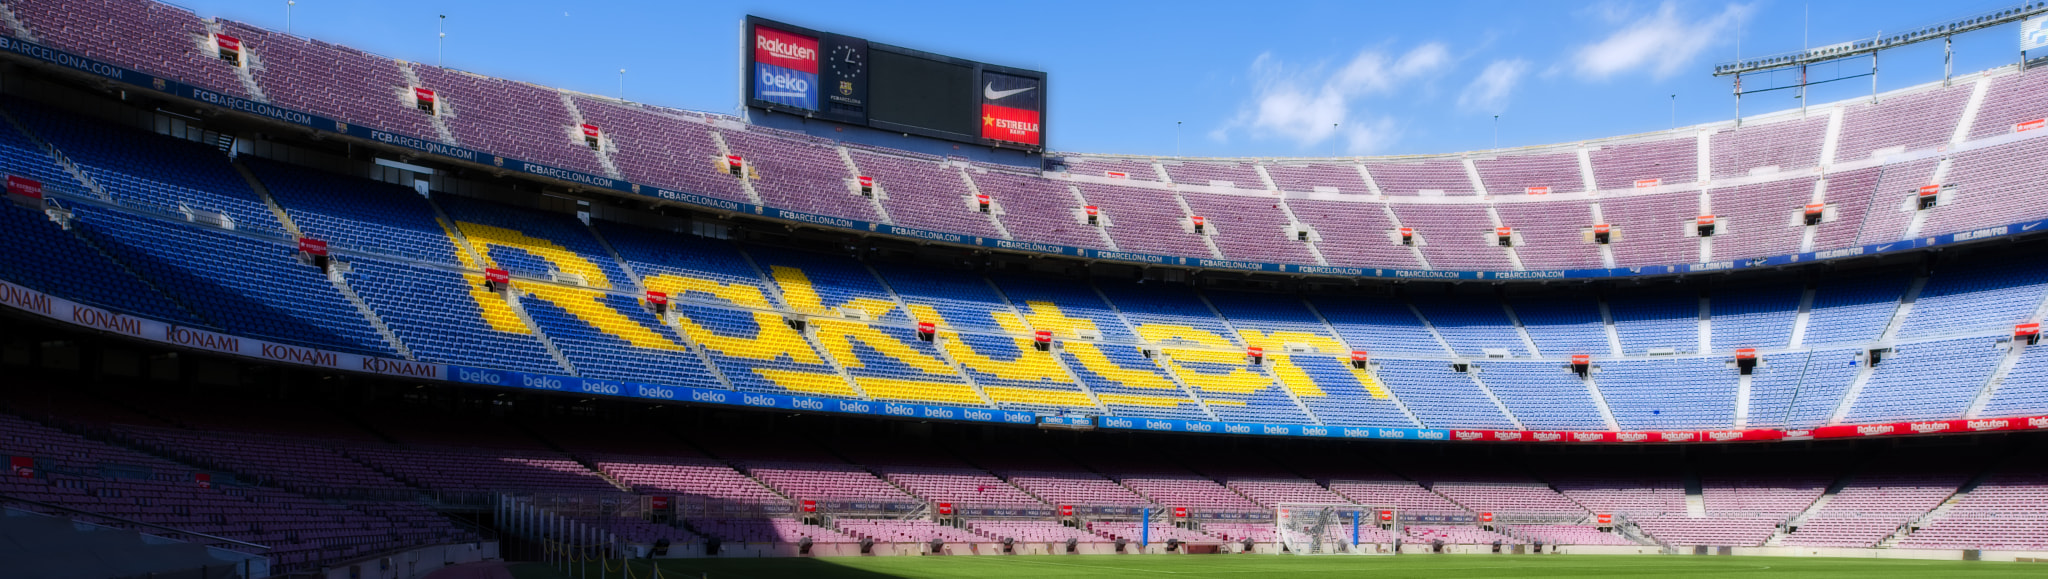 FC Barcelona Stadium ... Surreal